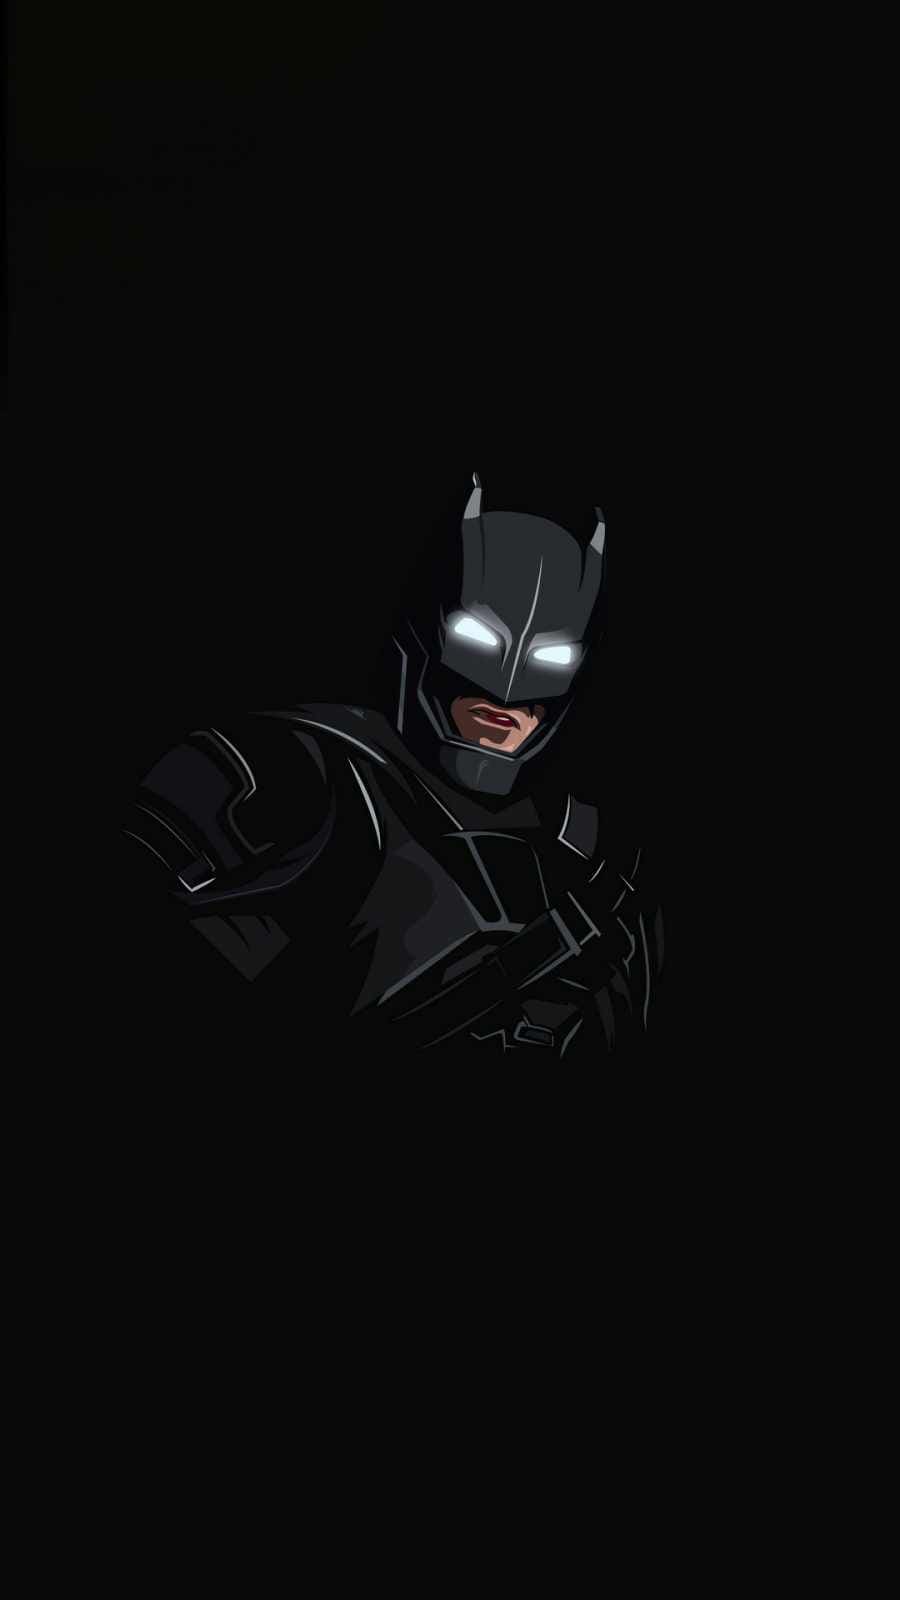 4K Batman dark minimal iPhone Wallpaper, Best iPhone Wallpaper and iPhone background, WallpaperUpdate, Best iPhone Wallpaper and iPhone background